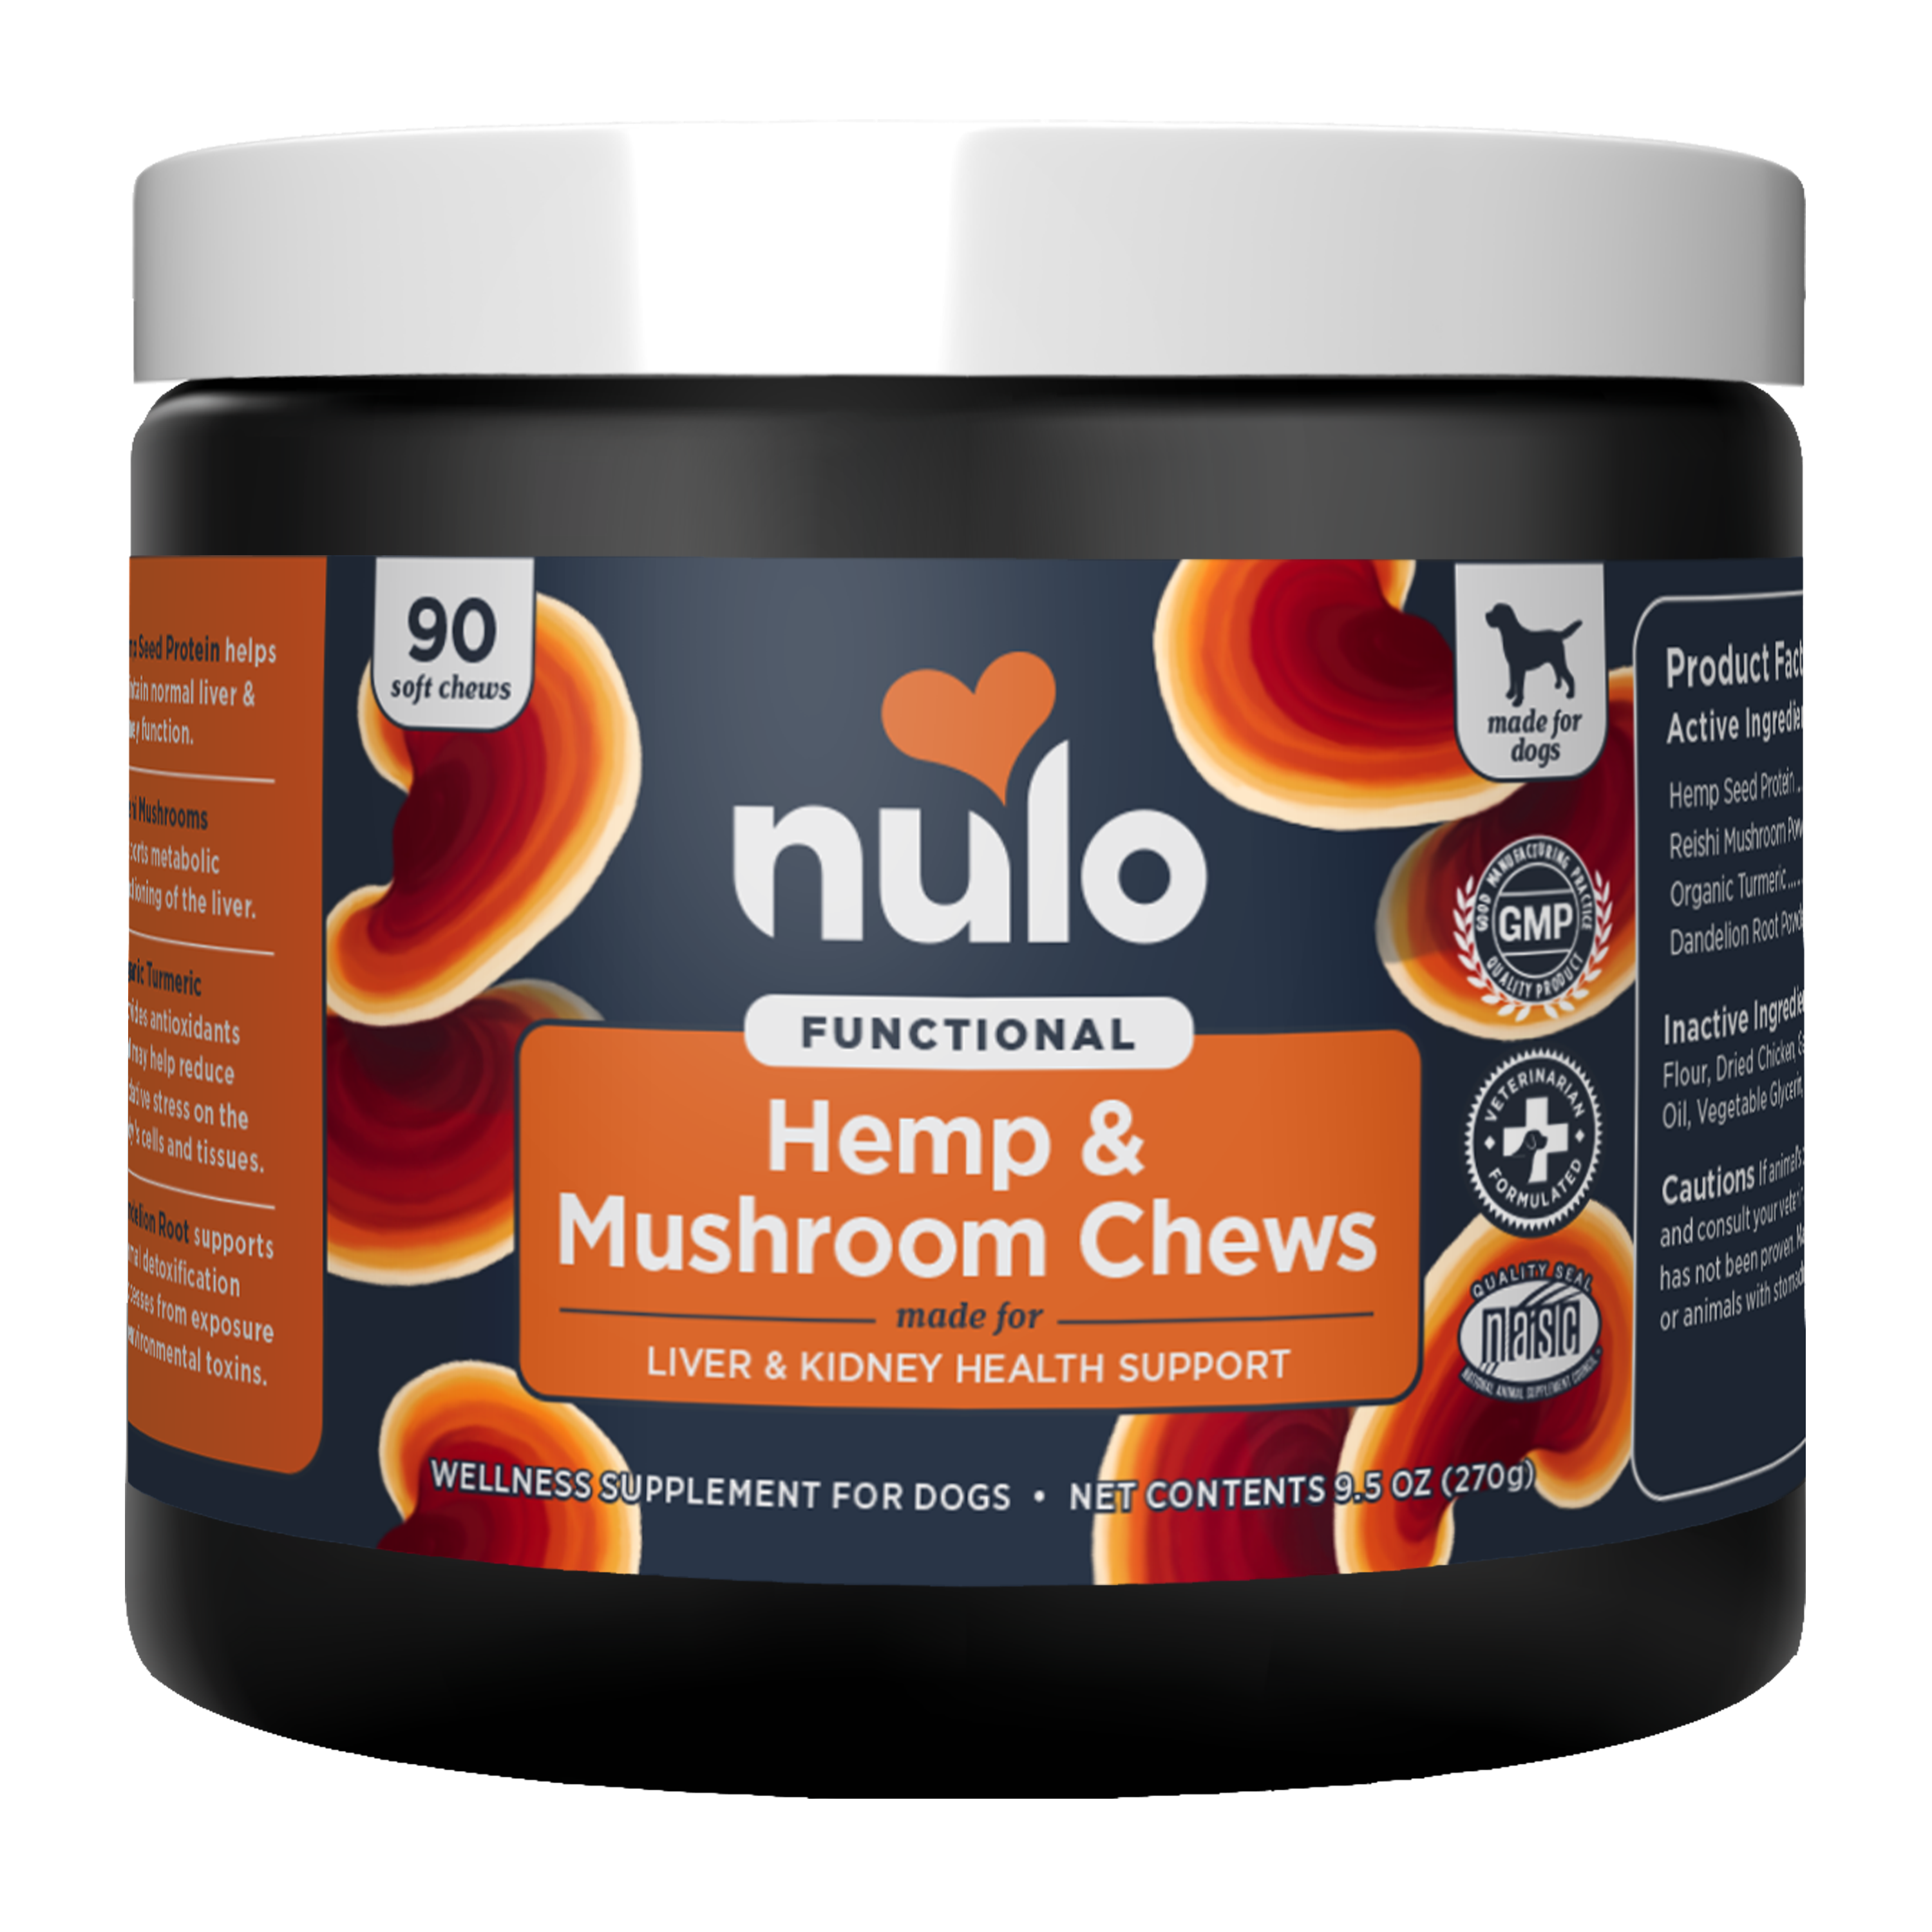 NU_Dog_Functional Soft Chews_Mushroom_9.5oz_FRONT